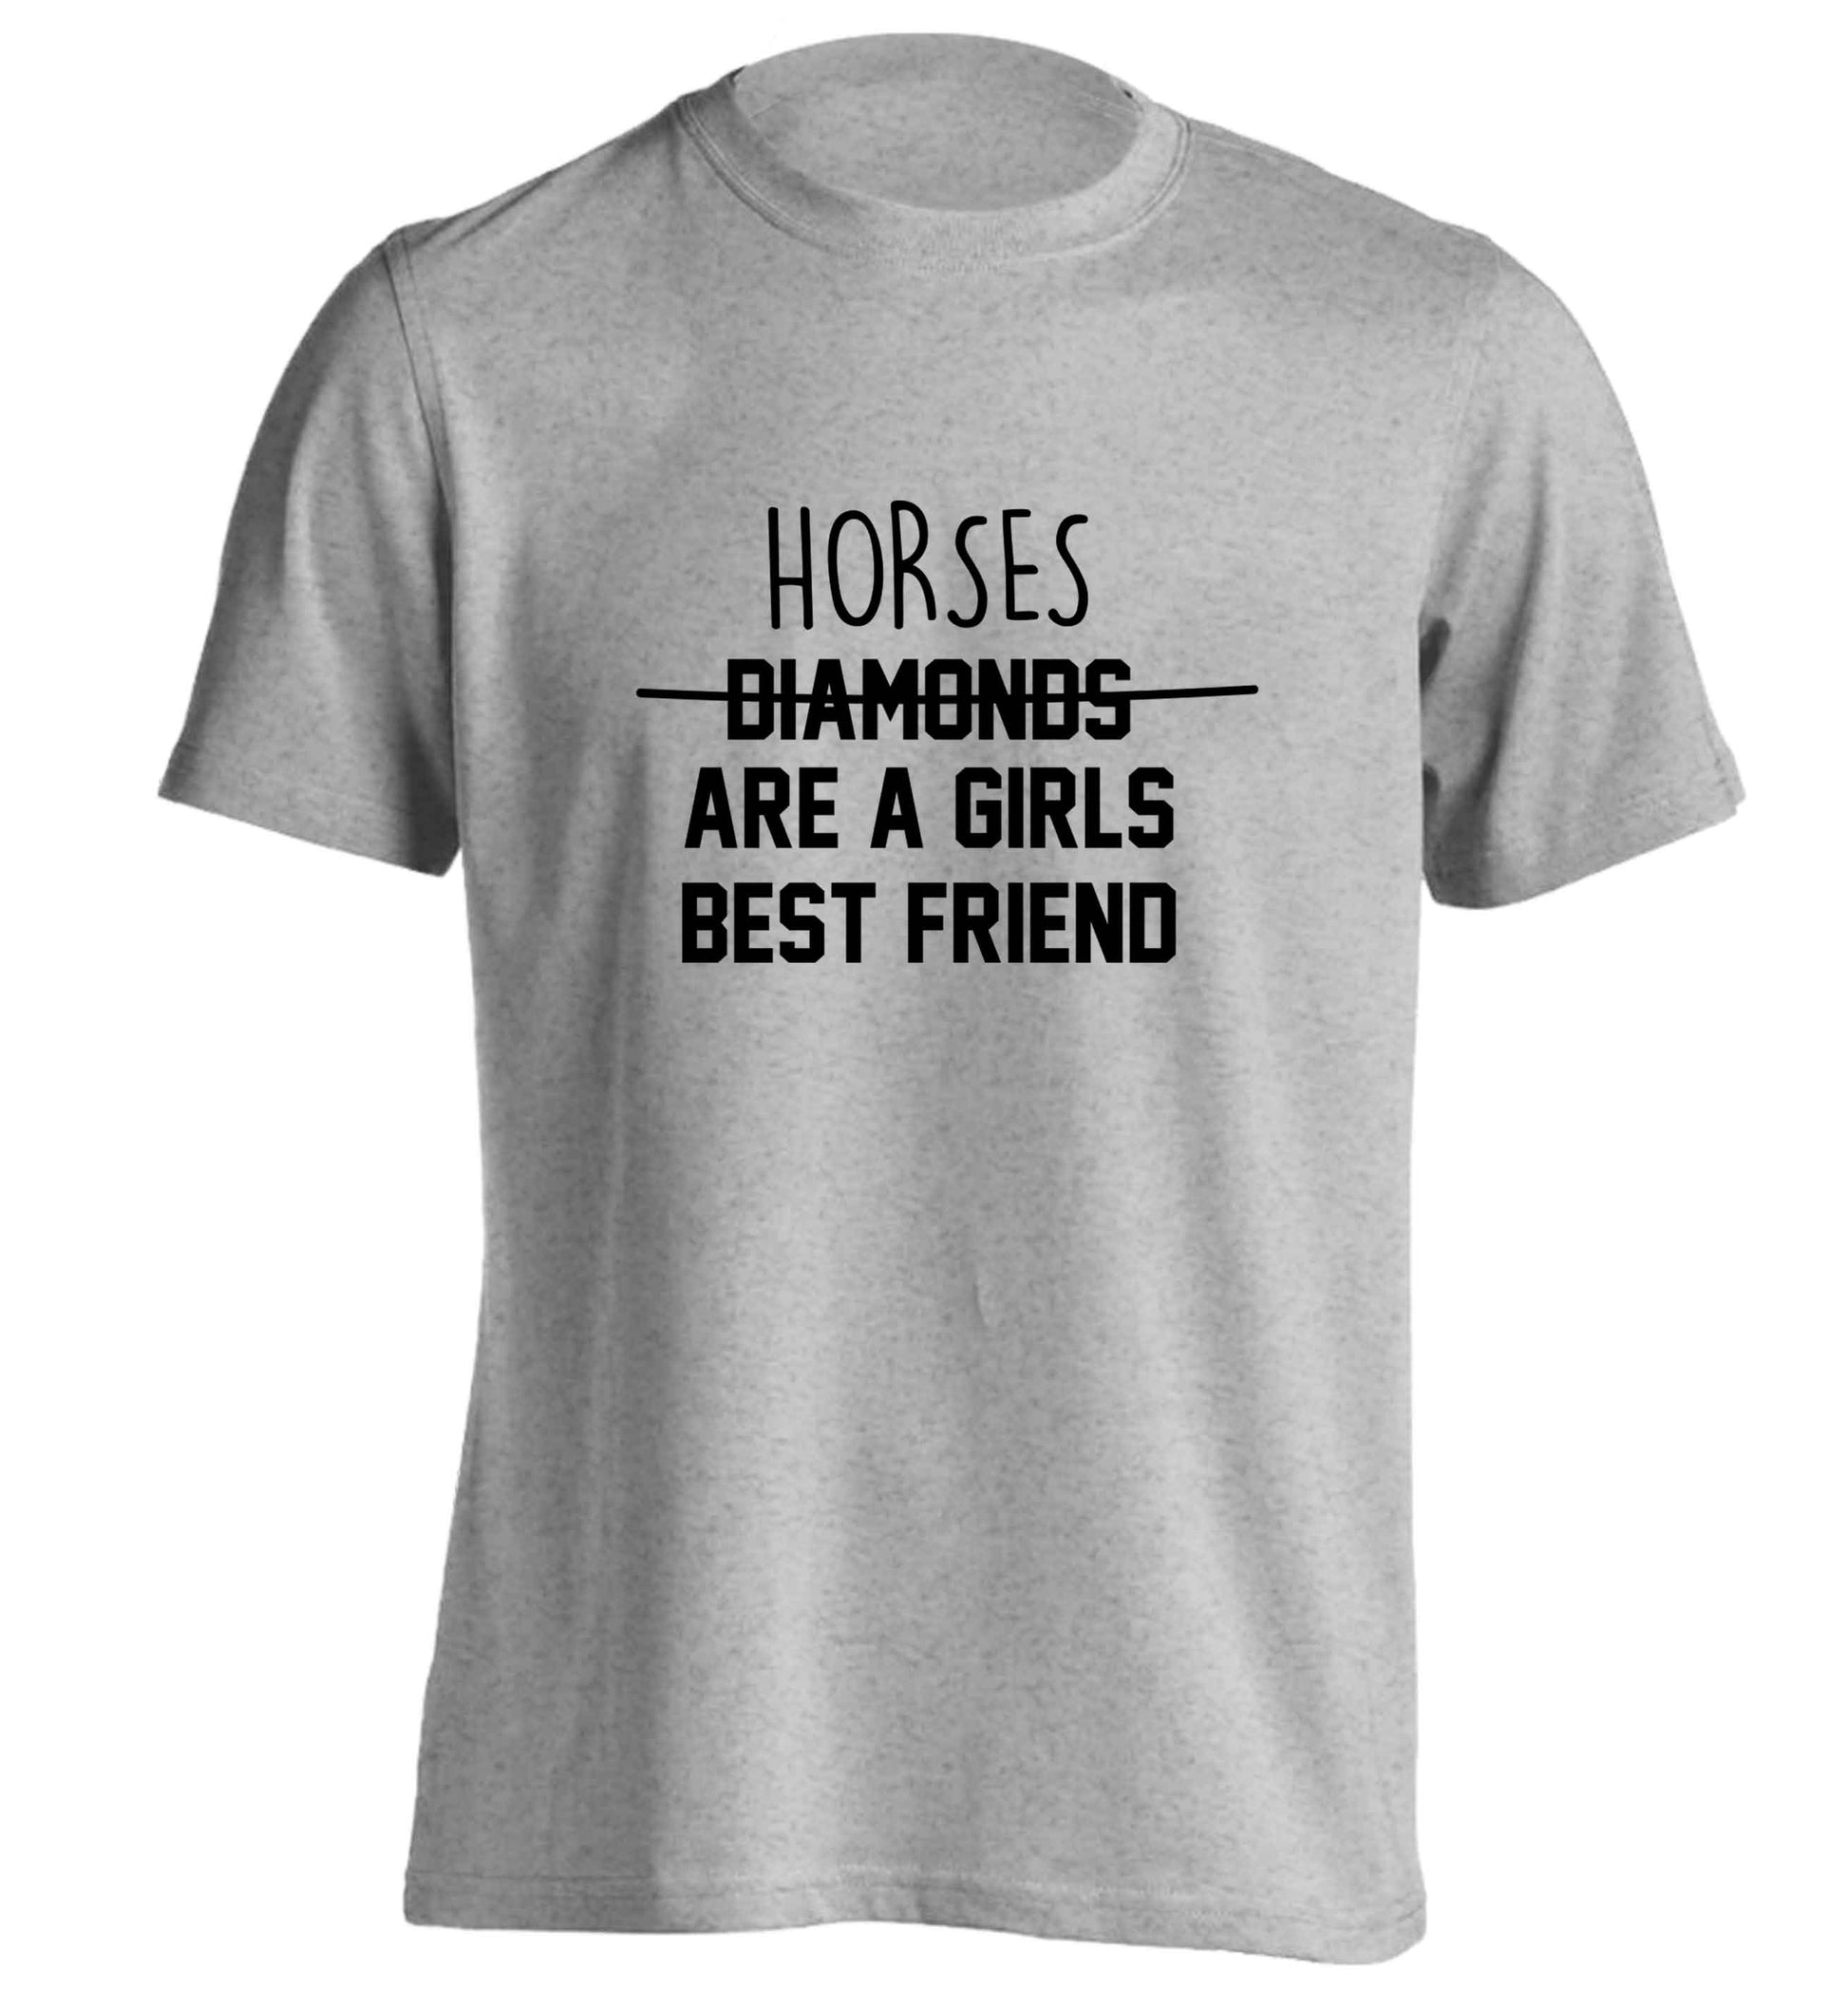 Horses are a girls best friend adults unisex grey Tshirt 2XL